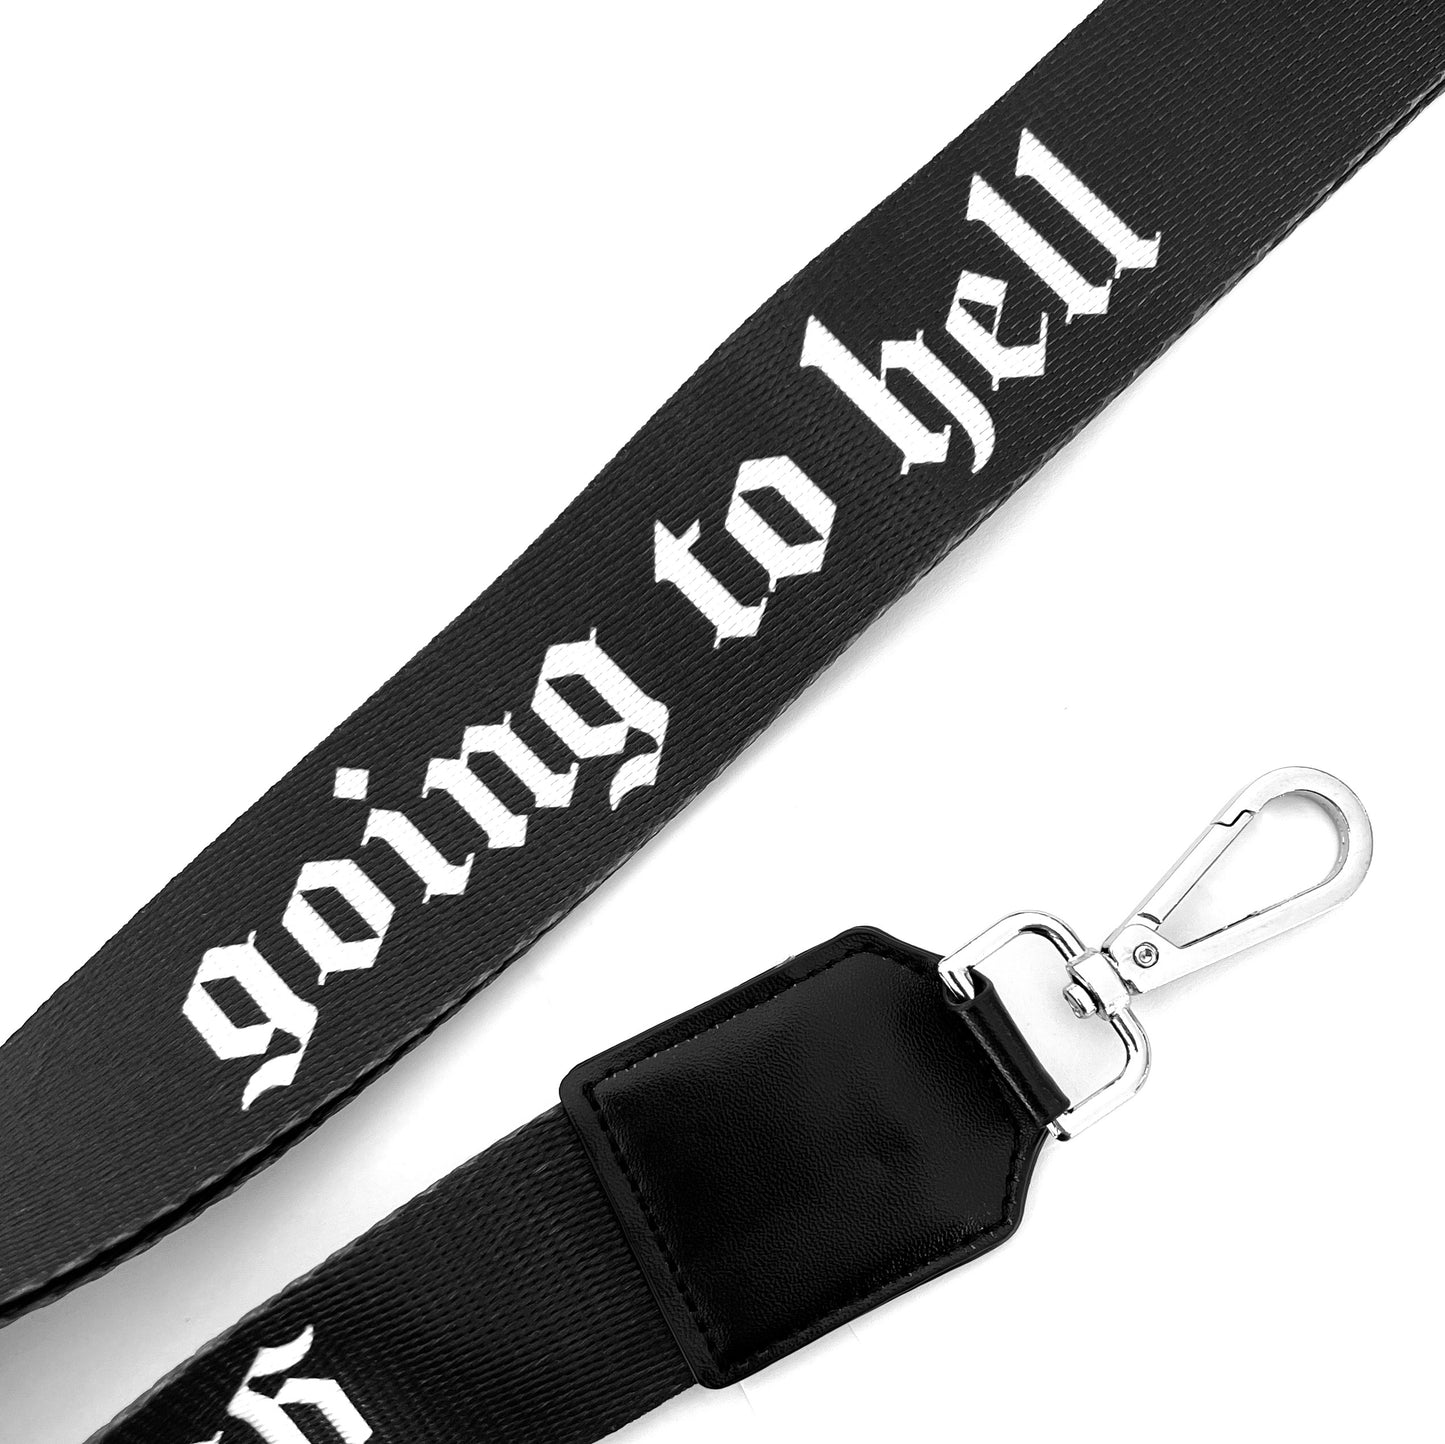 Hell Flower slogan bag strap